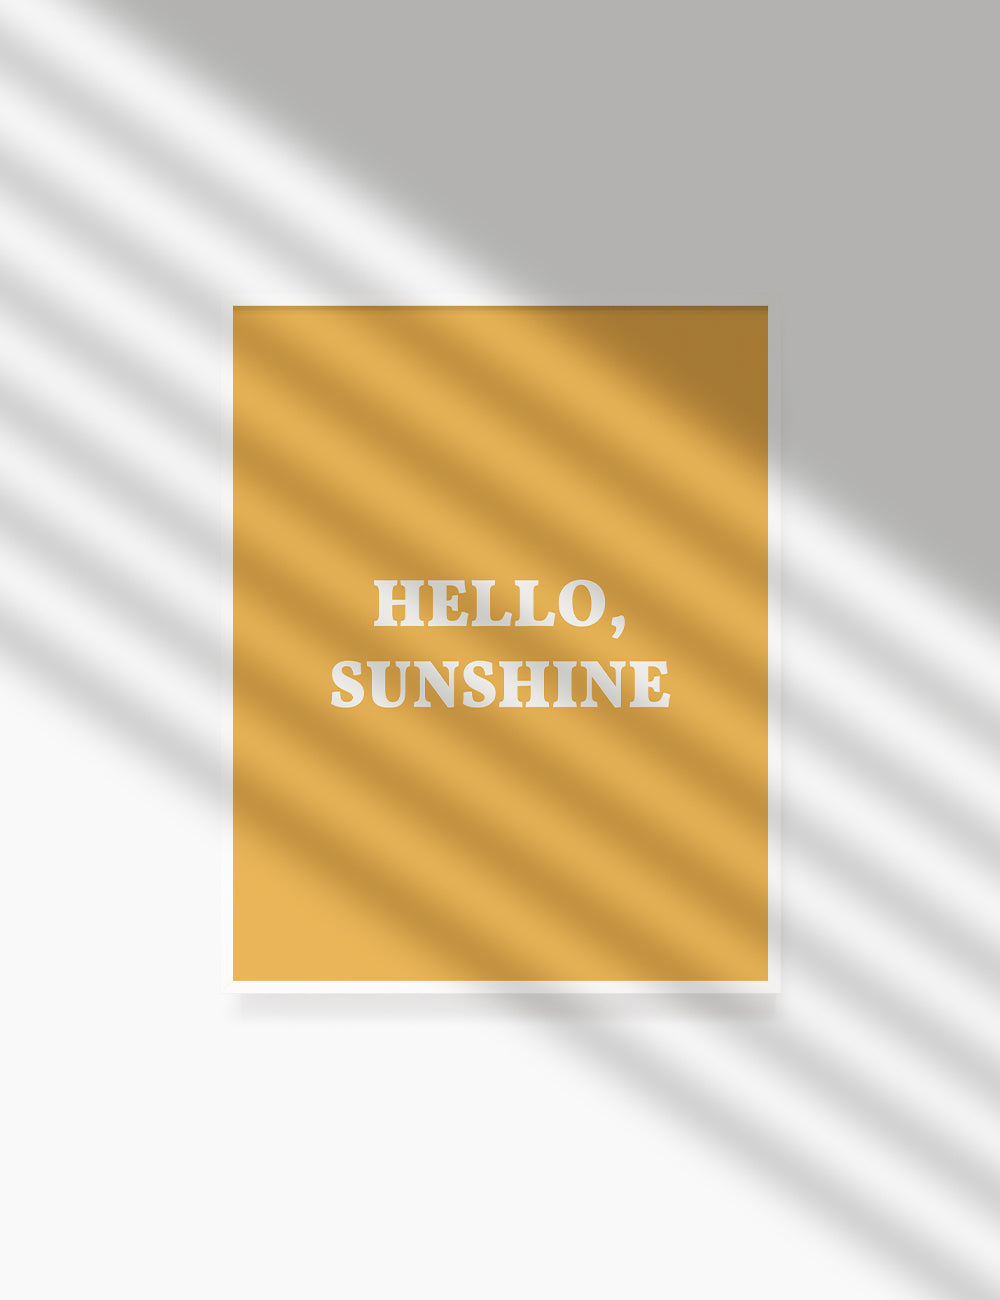 HELLO, SUNSHINE. Hello Sunshine Quote. Yellow. Printable Wall Art Quote. - PAPER MOON Art & Design